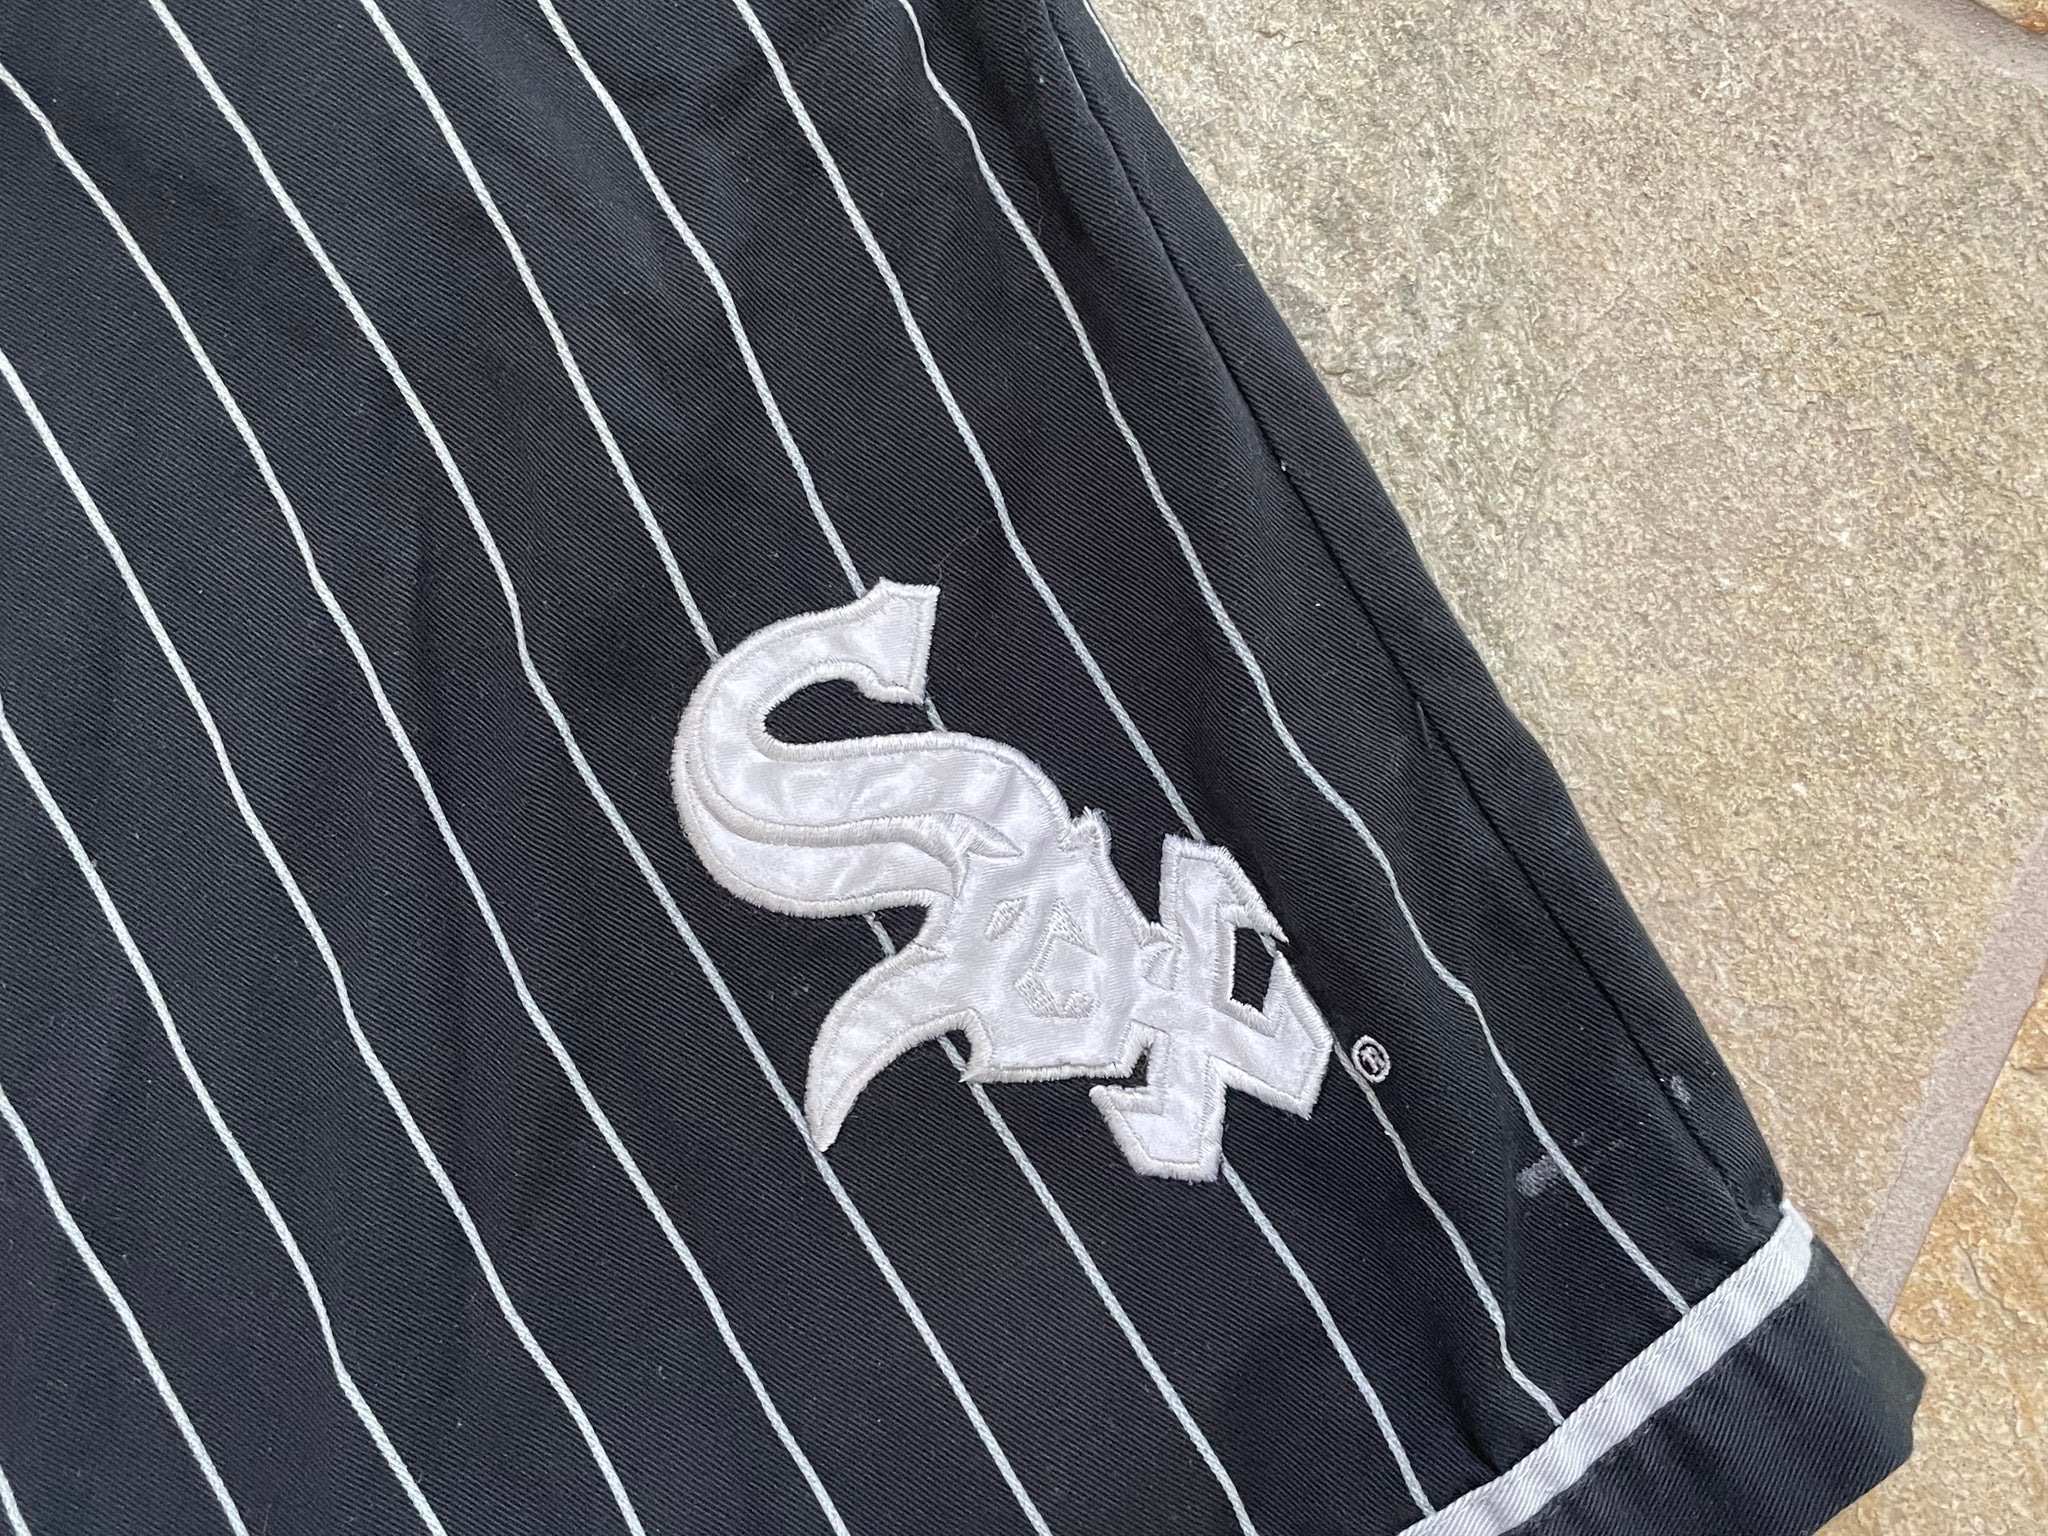 Vintage Chicago White Sox Baseball Starter Jersey Shirt MLB Size L